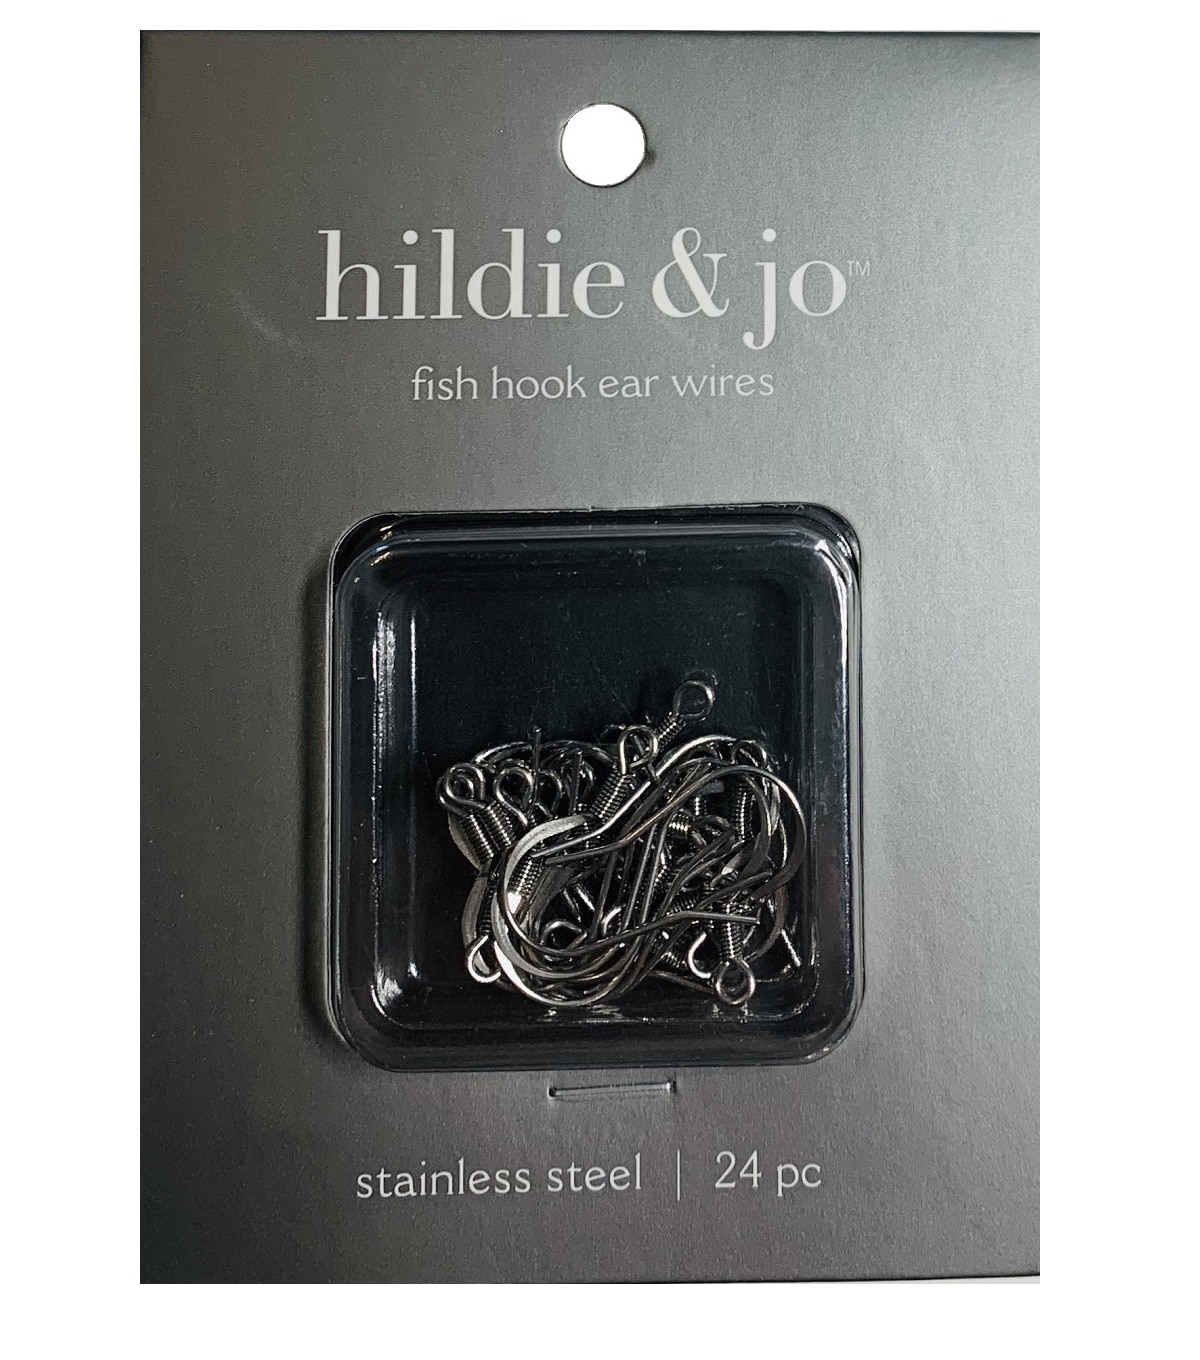 4 Stainless Steel Fish Hook Ear Wires 24pk by hildie & jo